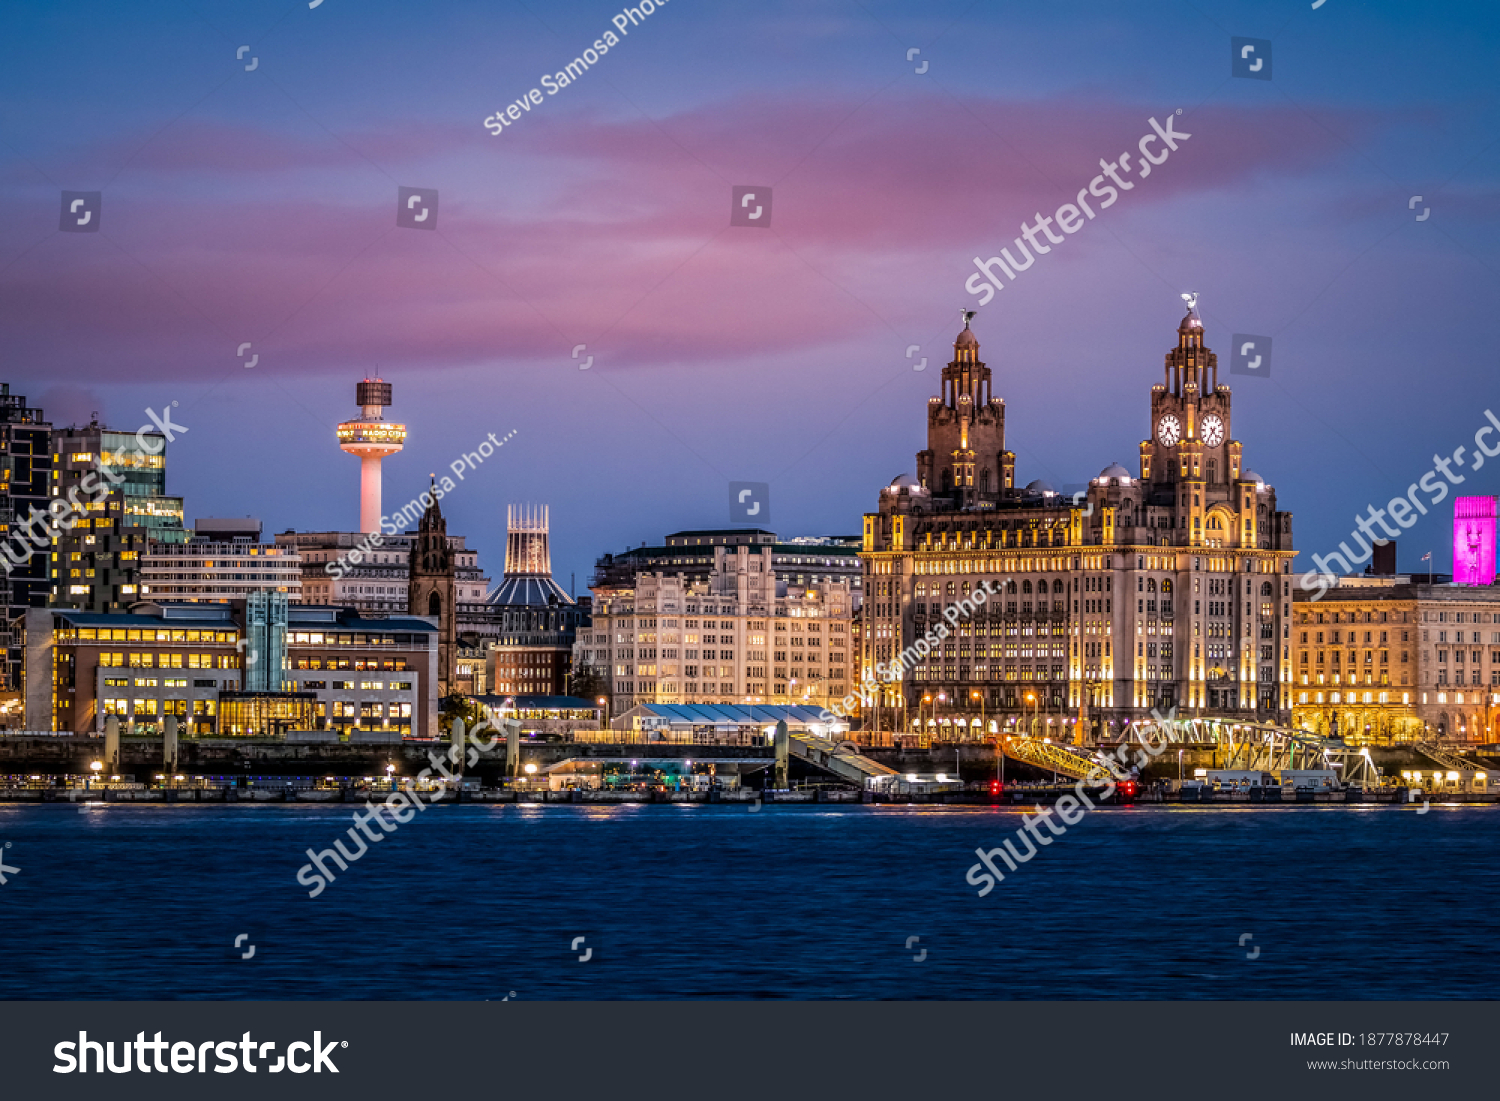 Liverpool waterfront illuminated at dusk